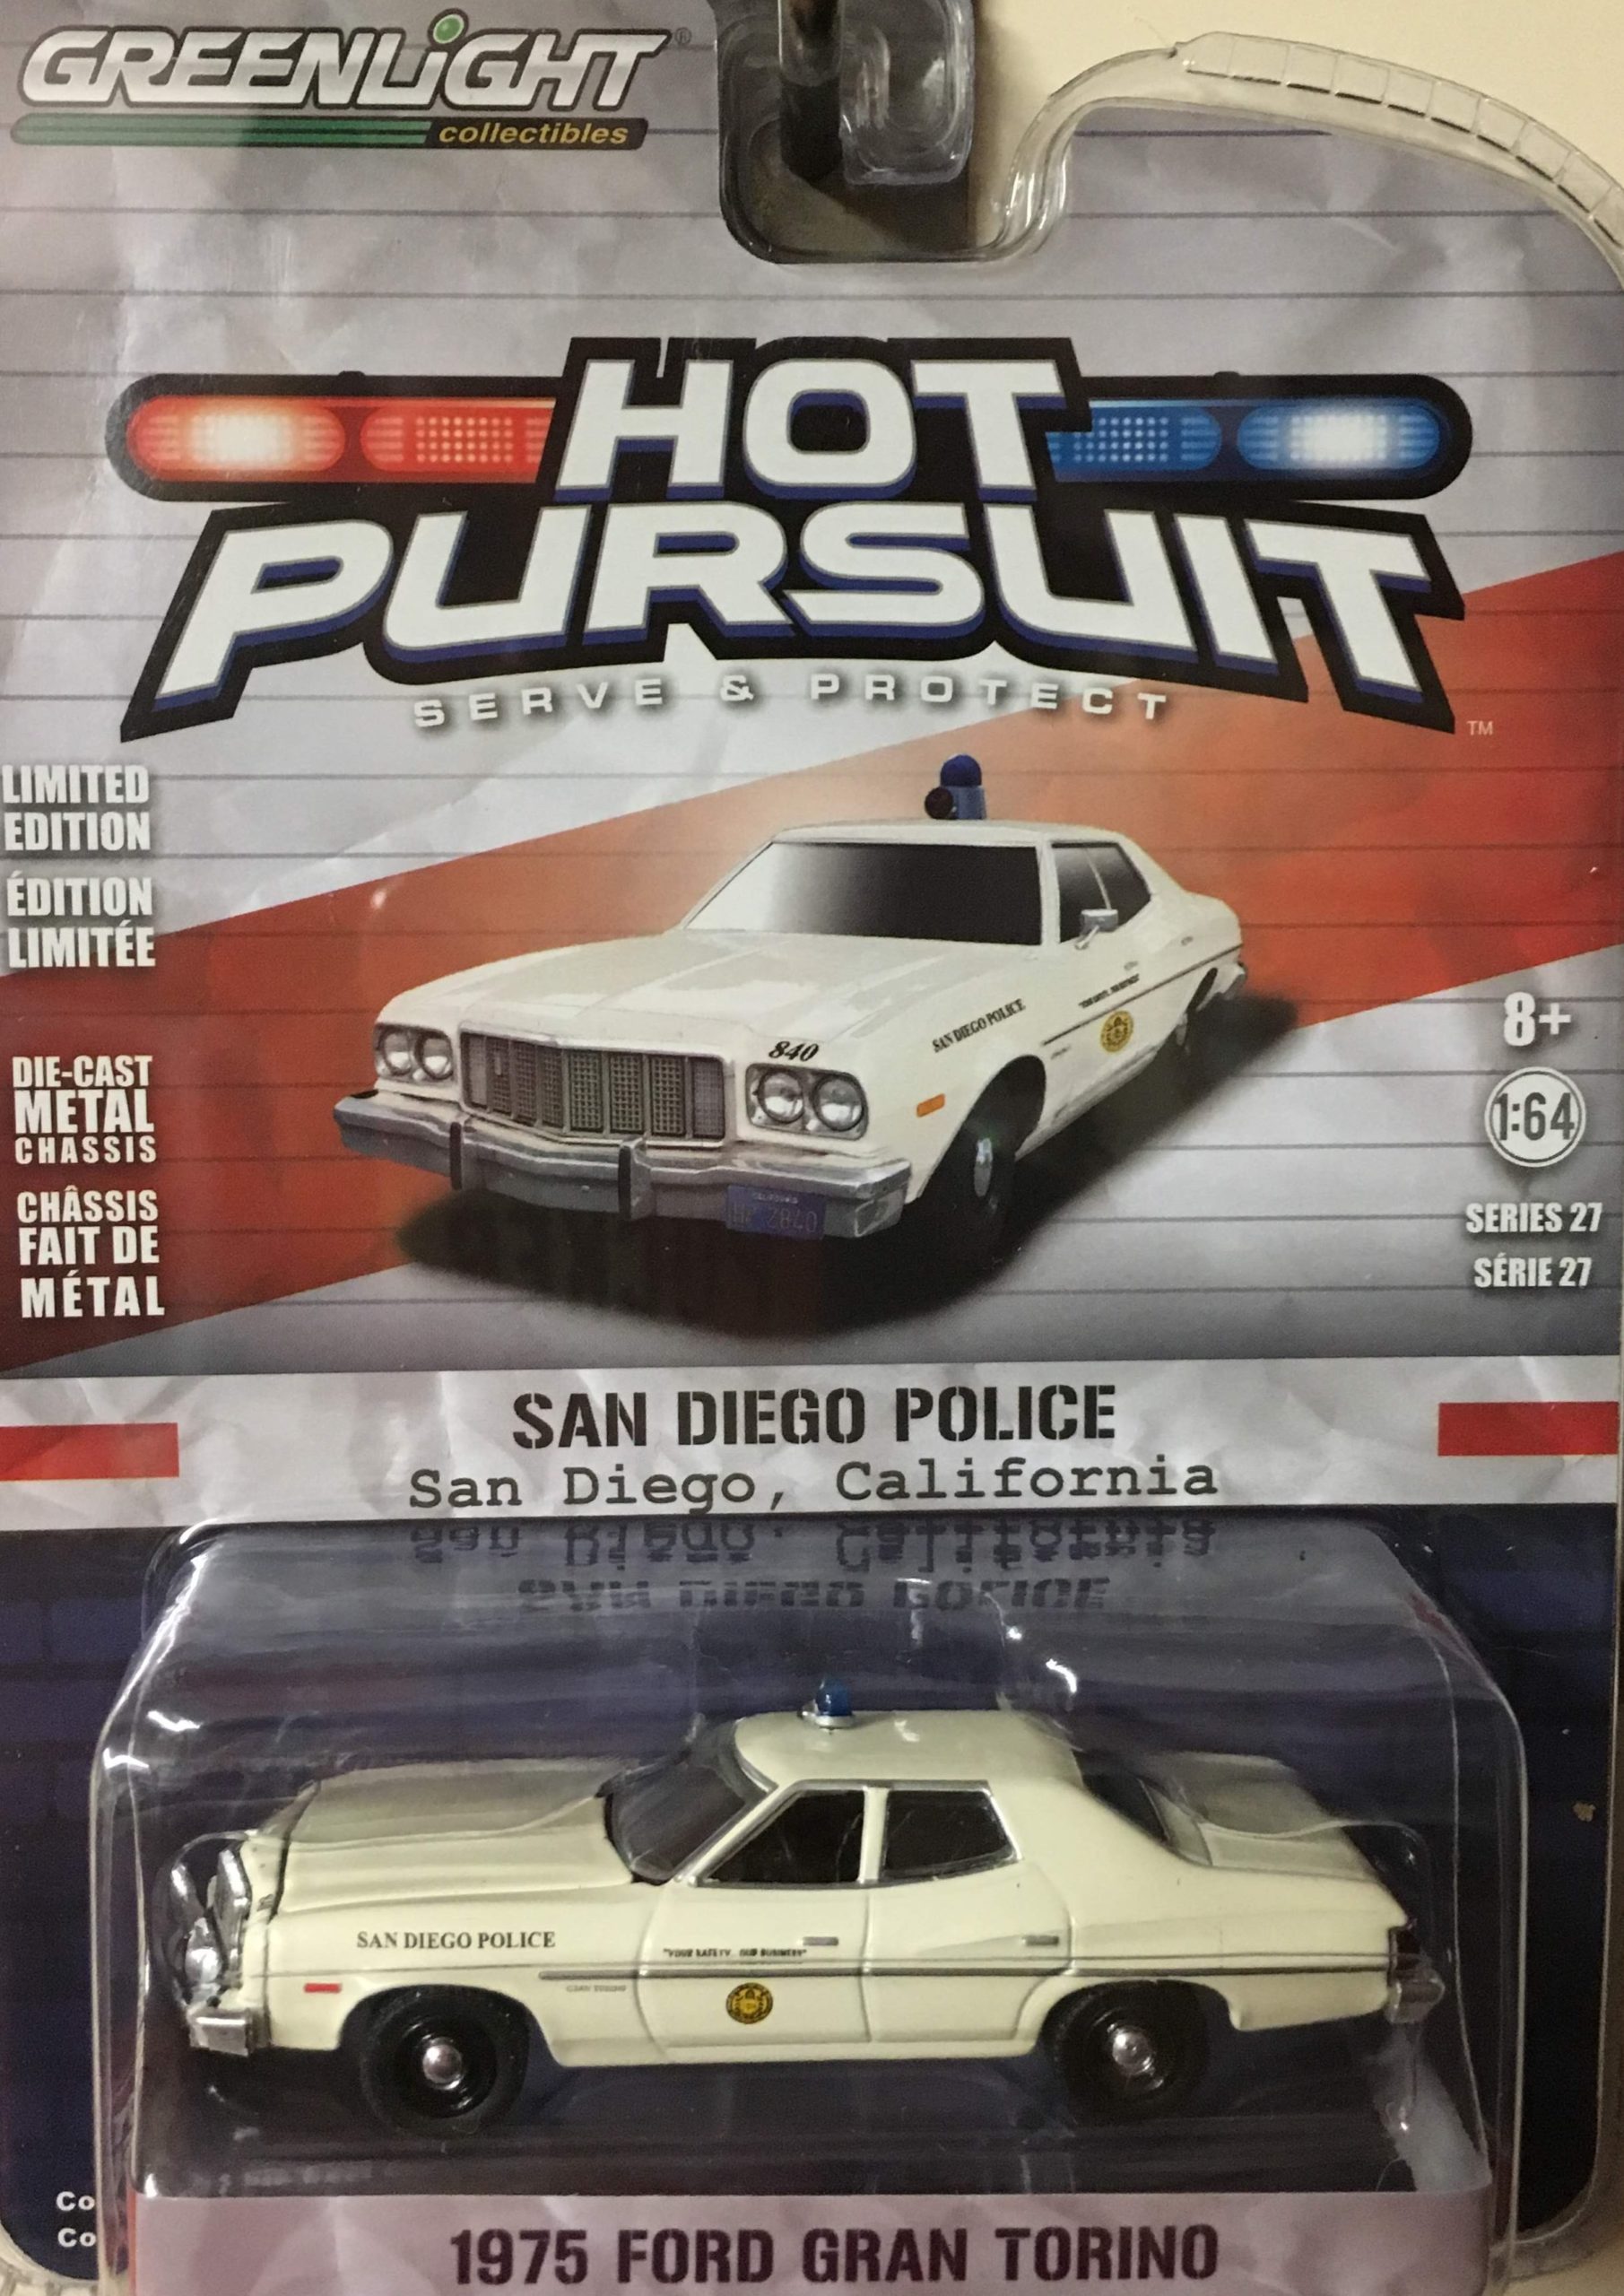 Ford Gran Torino 1975, San Diego, CA Police. 1:64 Scale